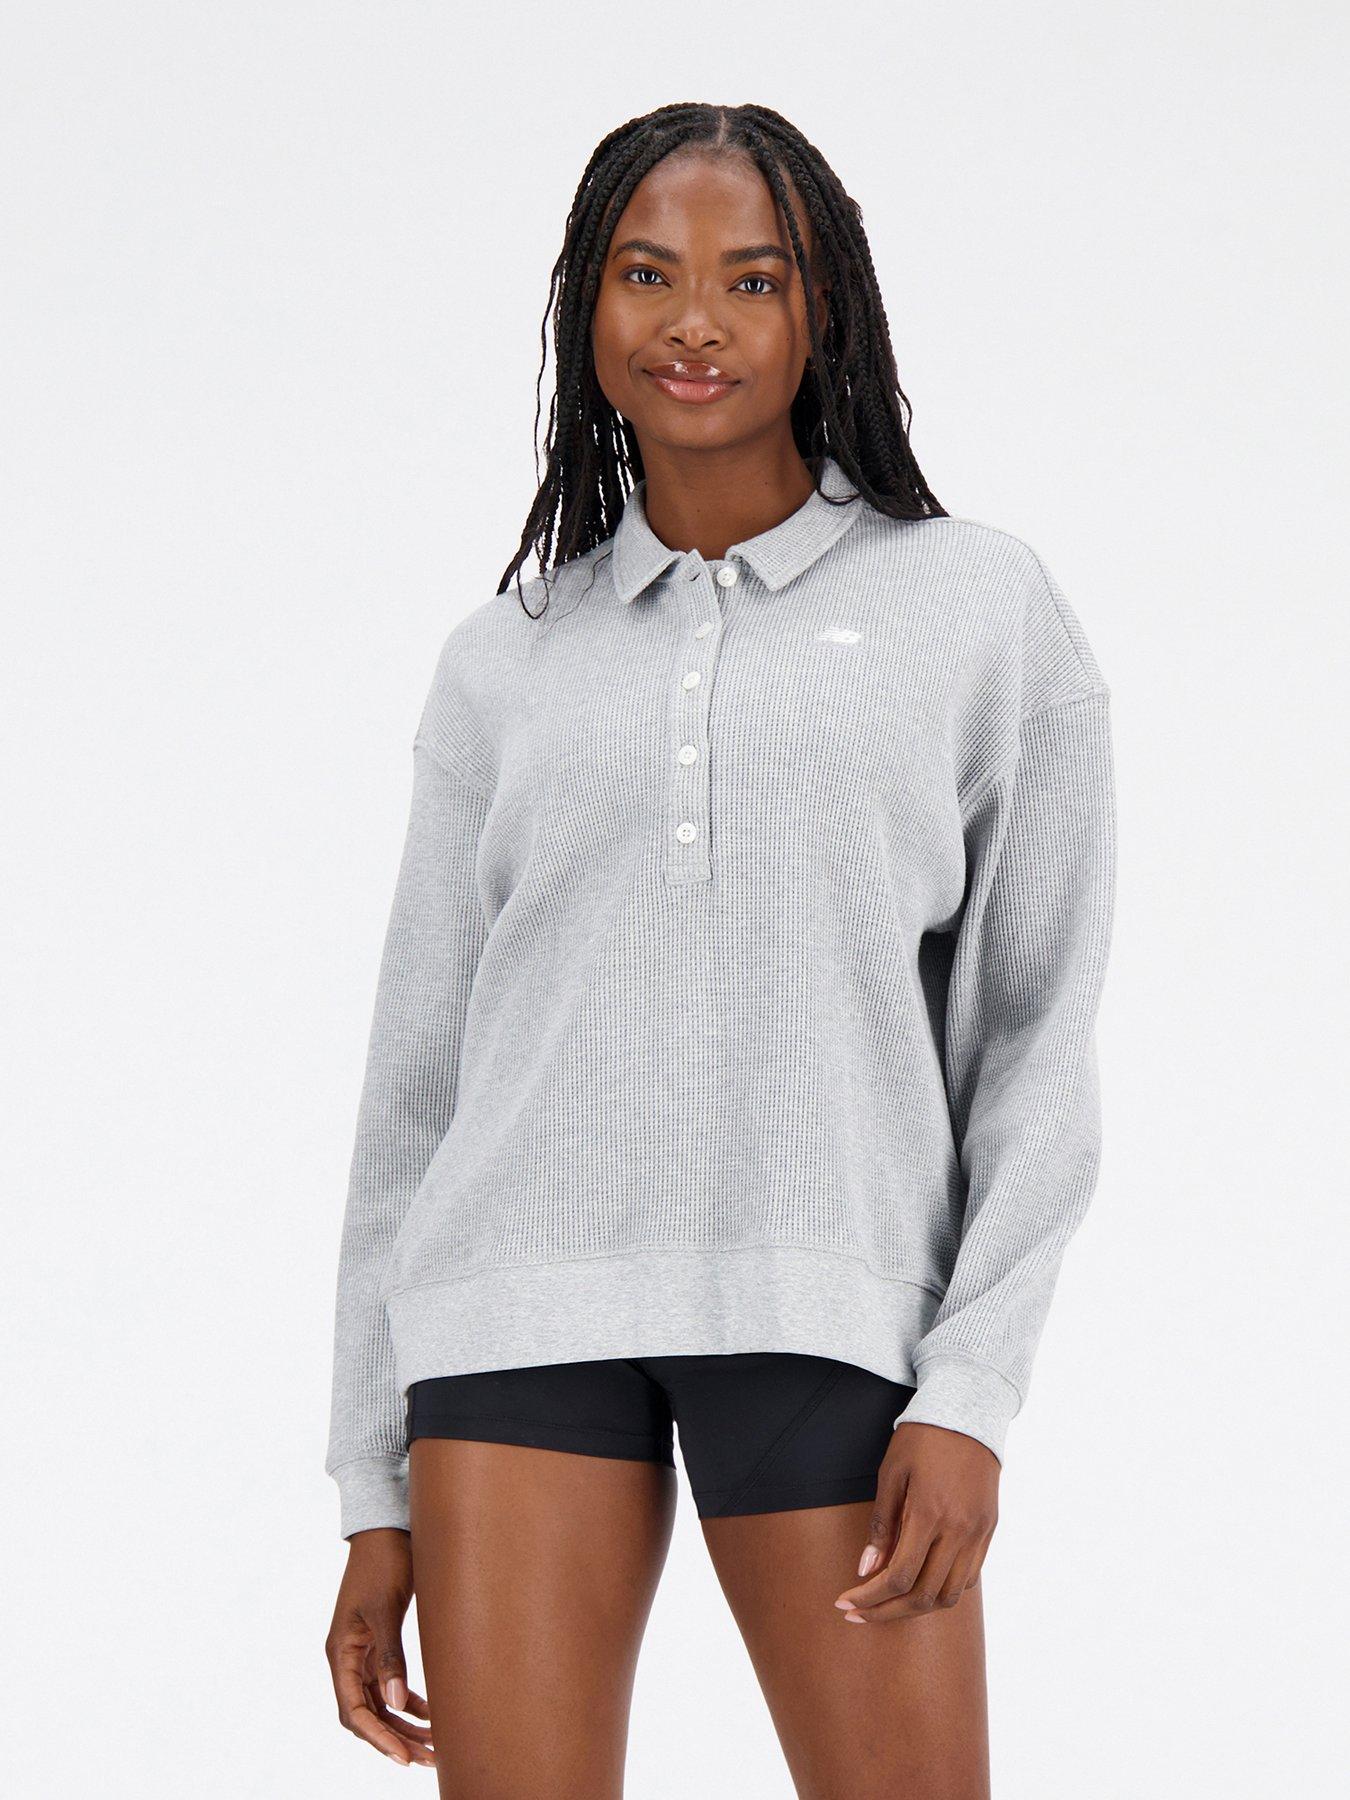 New Balance Womens Athletics Collared Sweatshirt - Grey